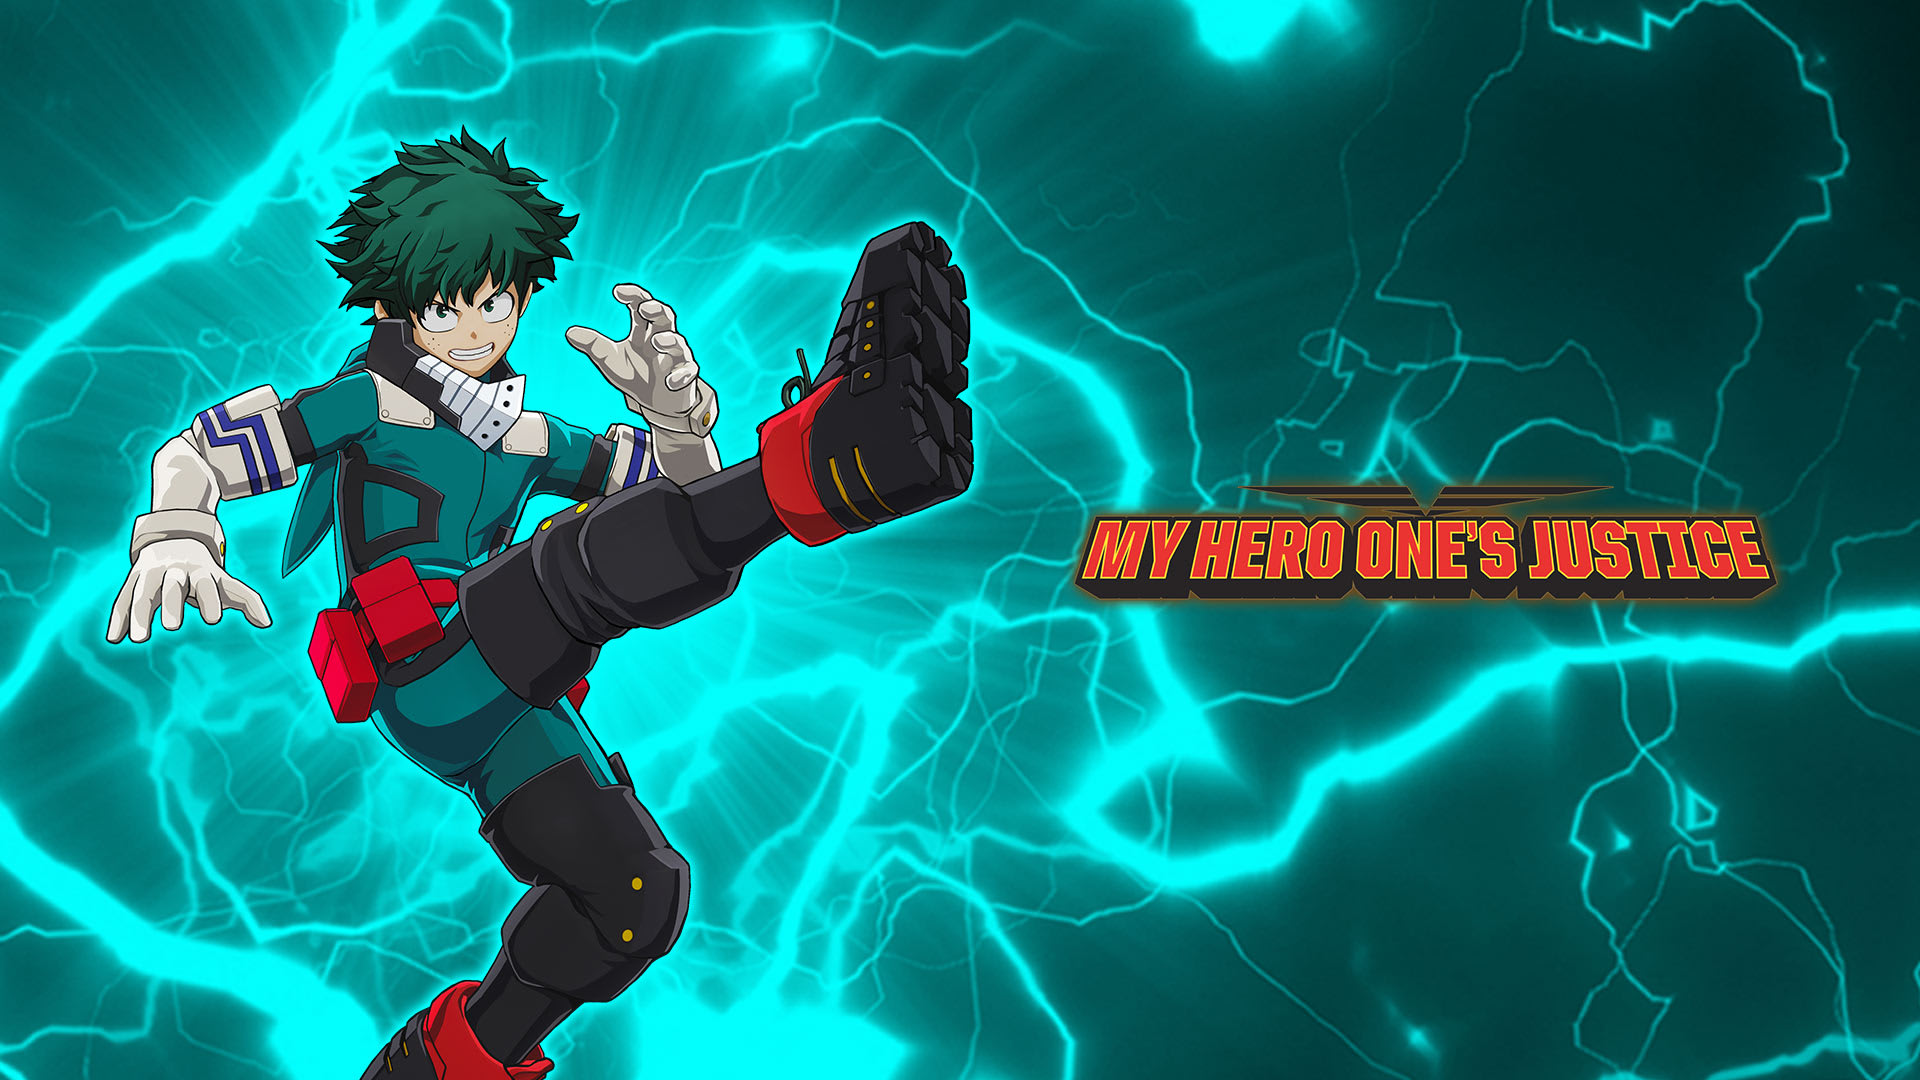 MY HERO ONE'S JUSTICE Playable Character: Deku Shoot Style